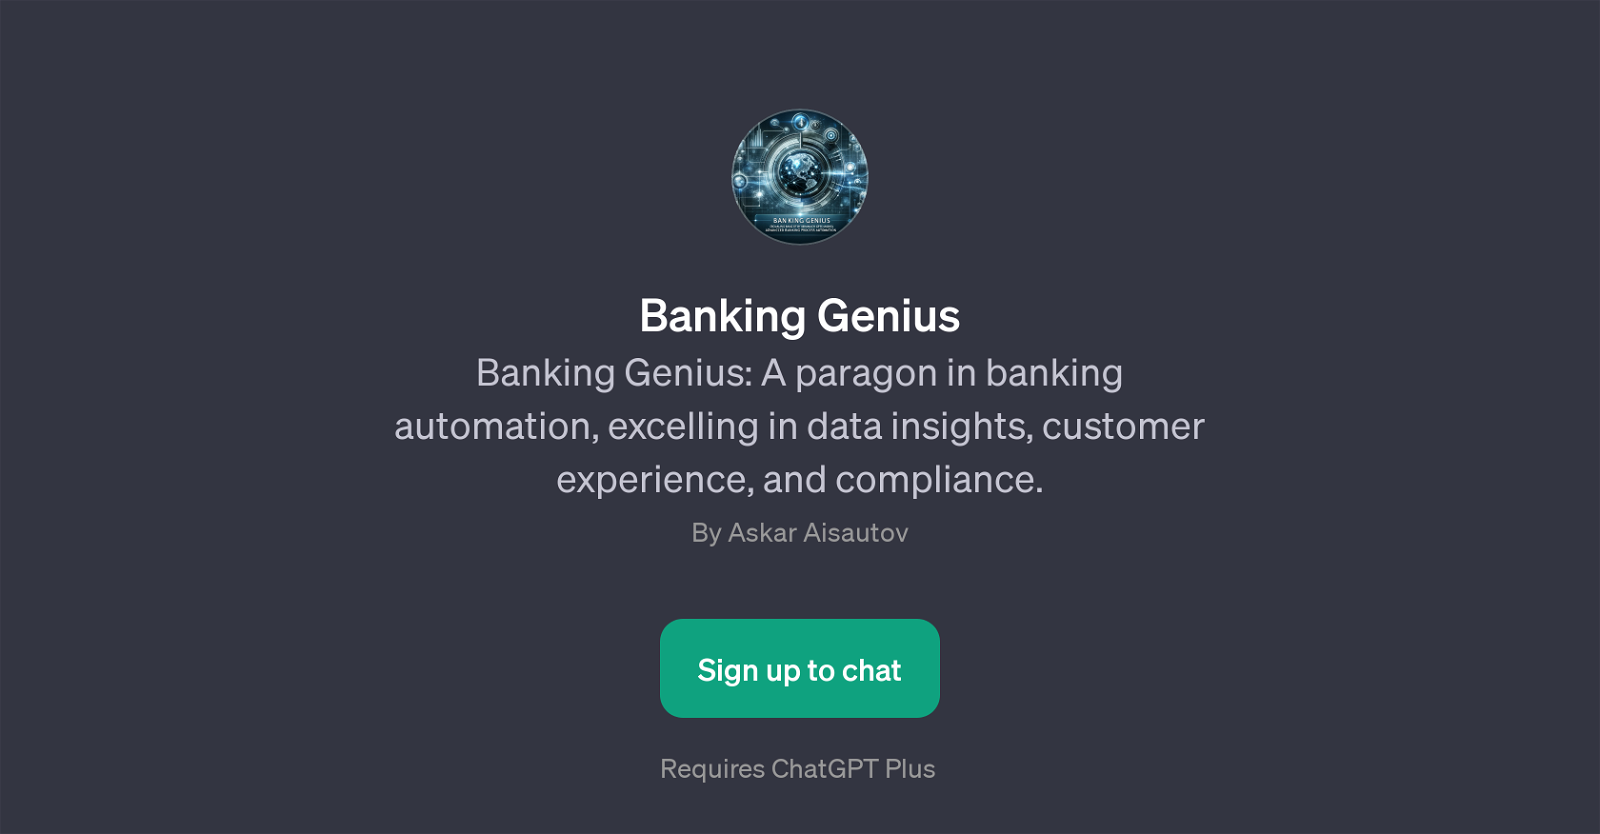 Banking Genius website